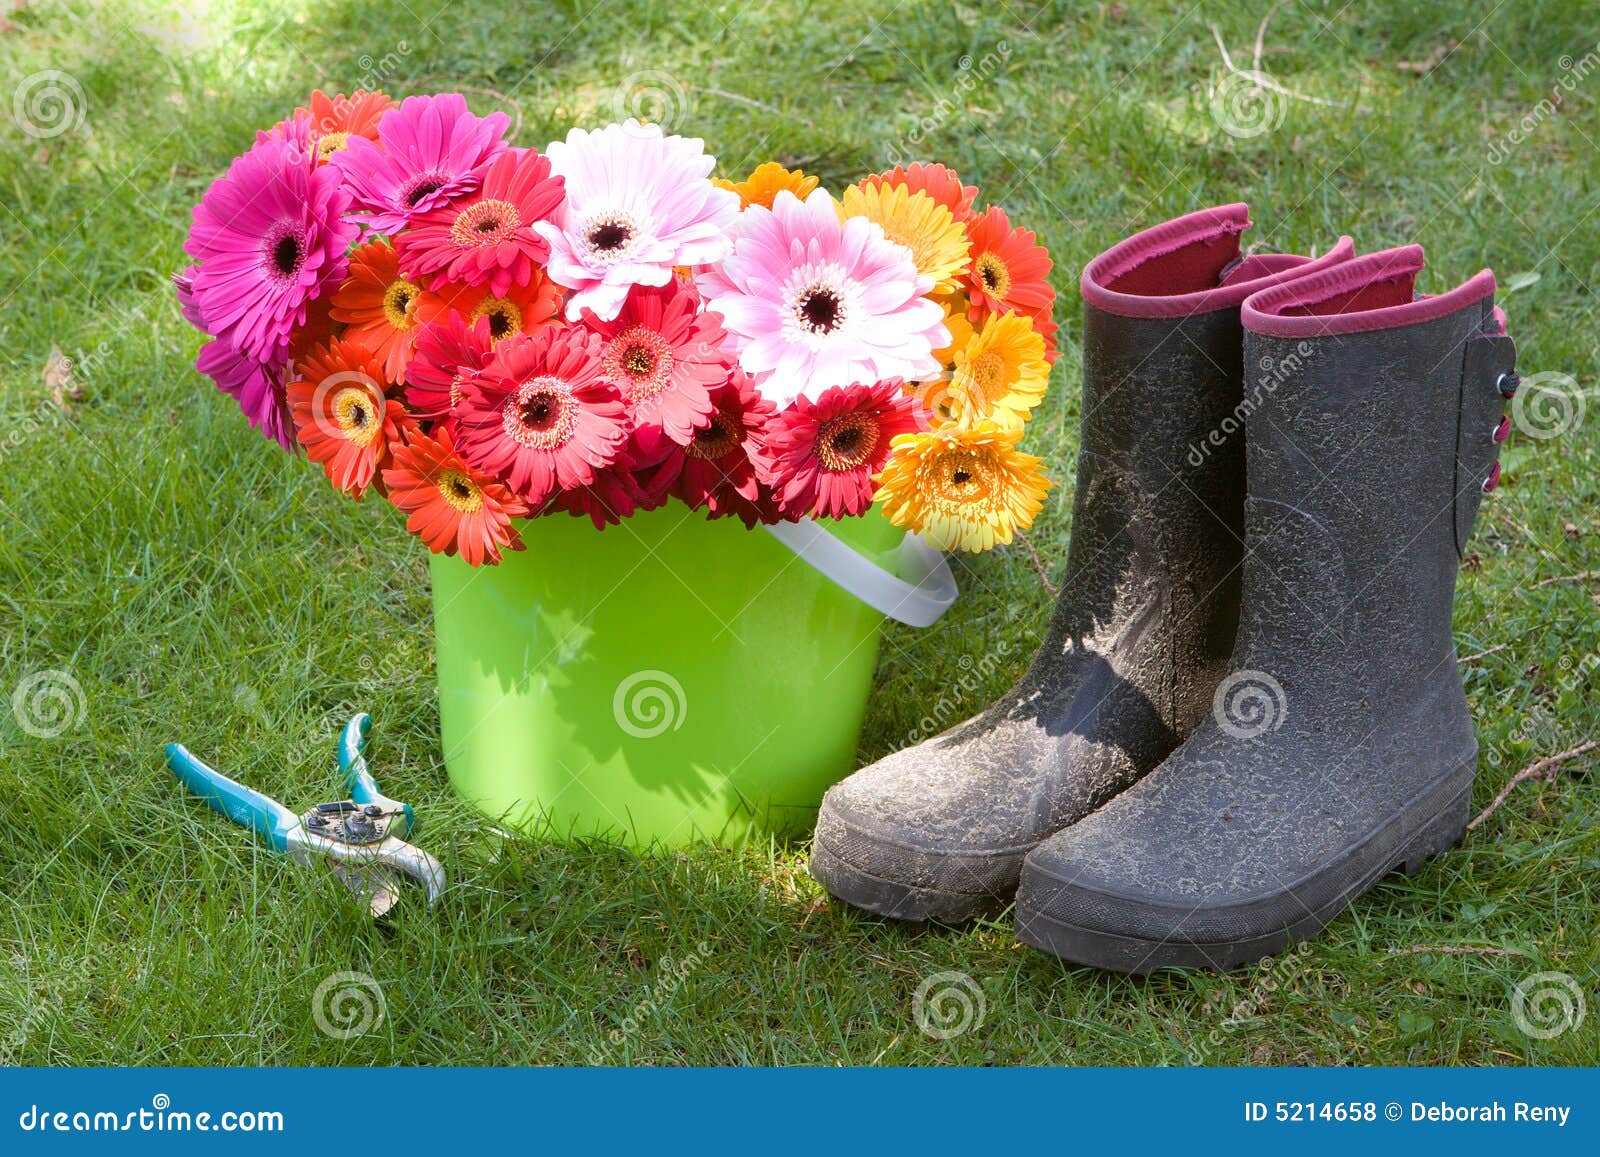 daisies, boots, & secateurs - yard work